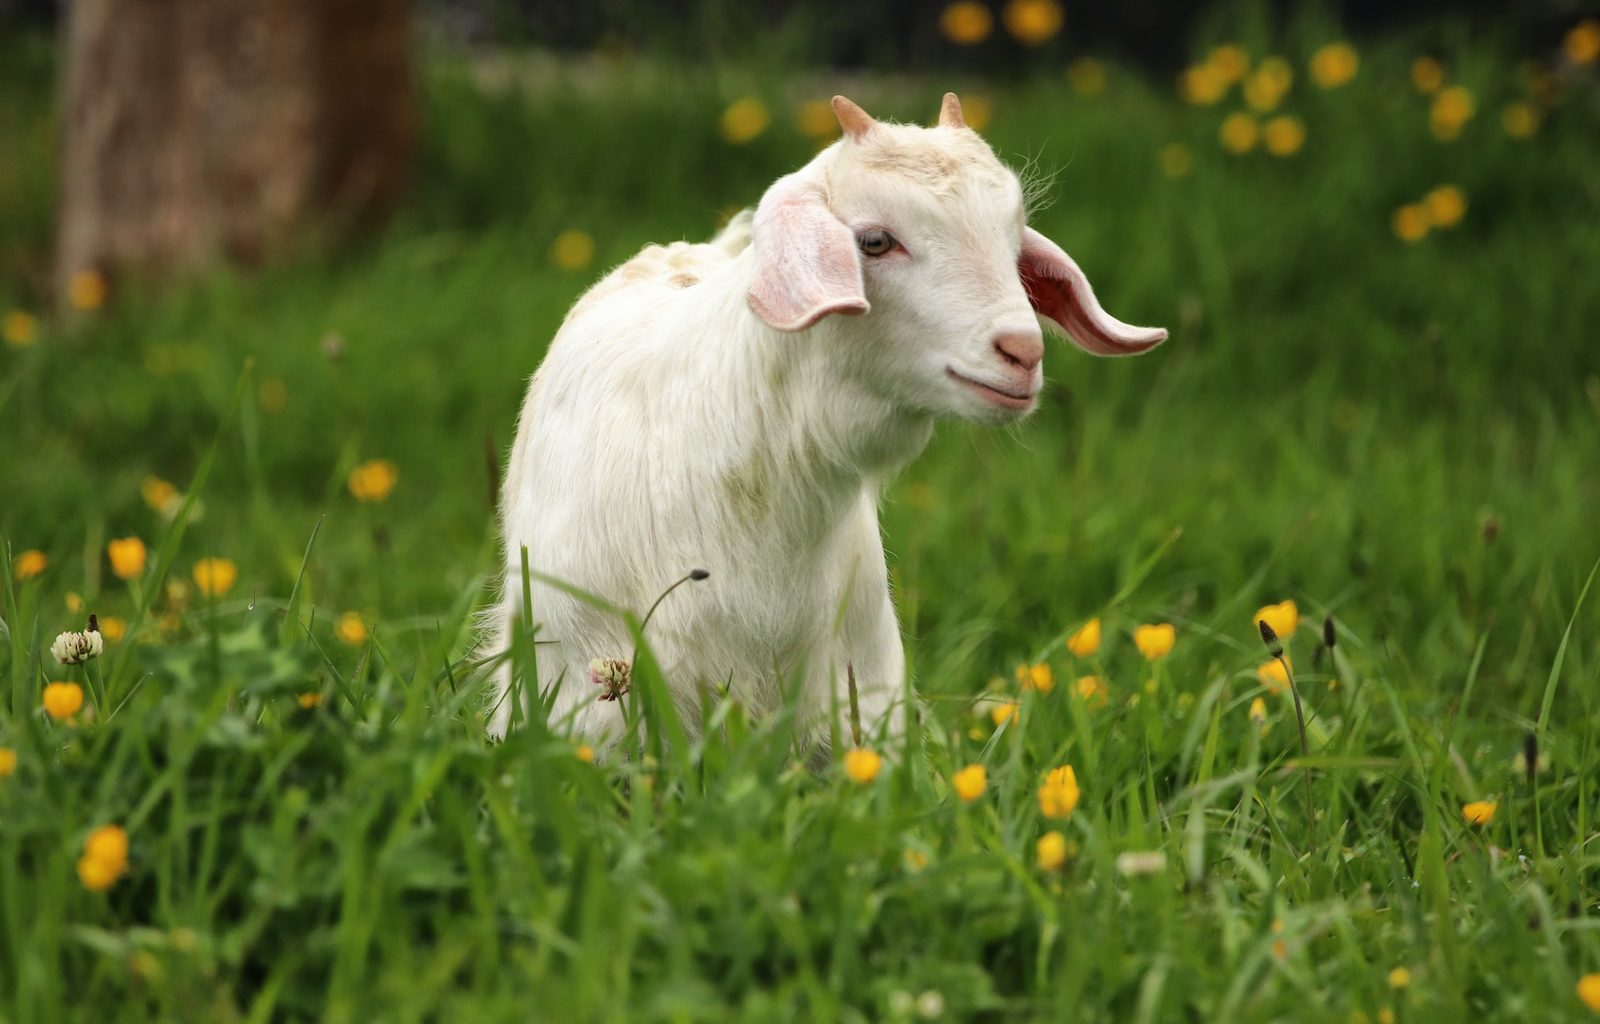 white goat standing on green grass field